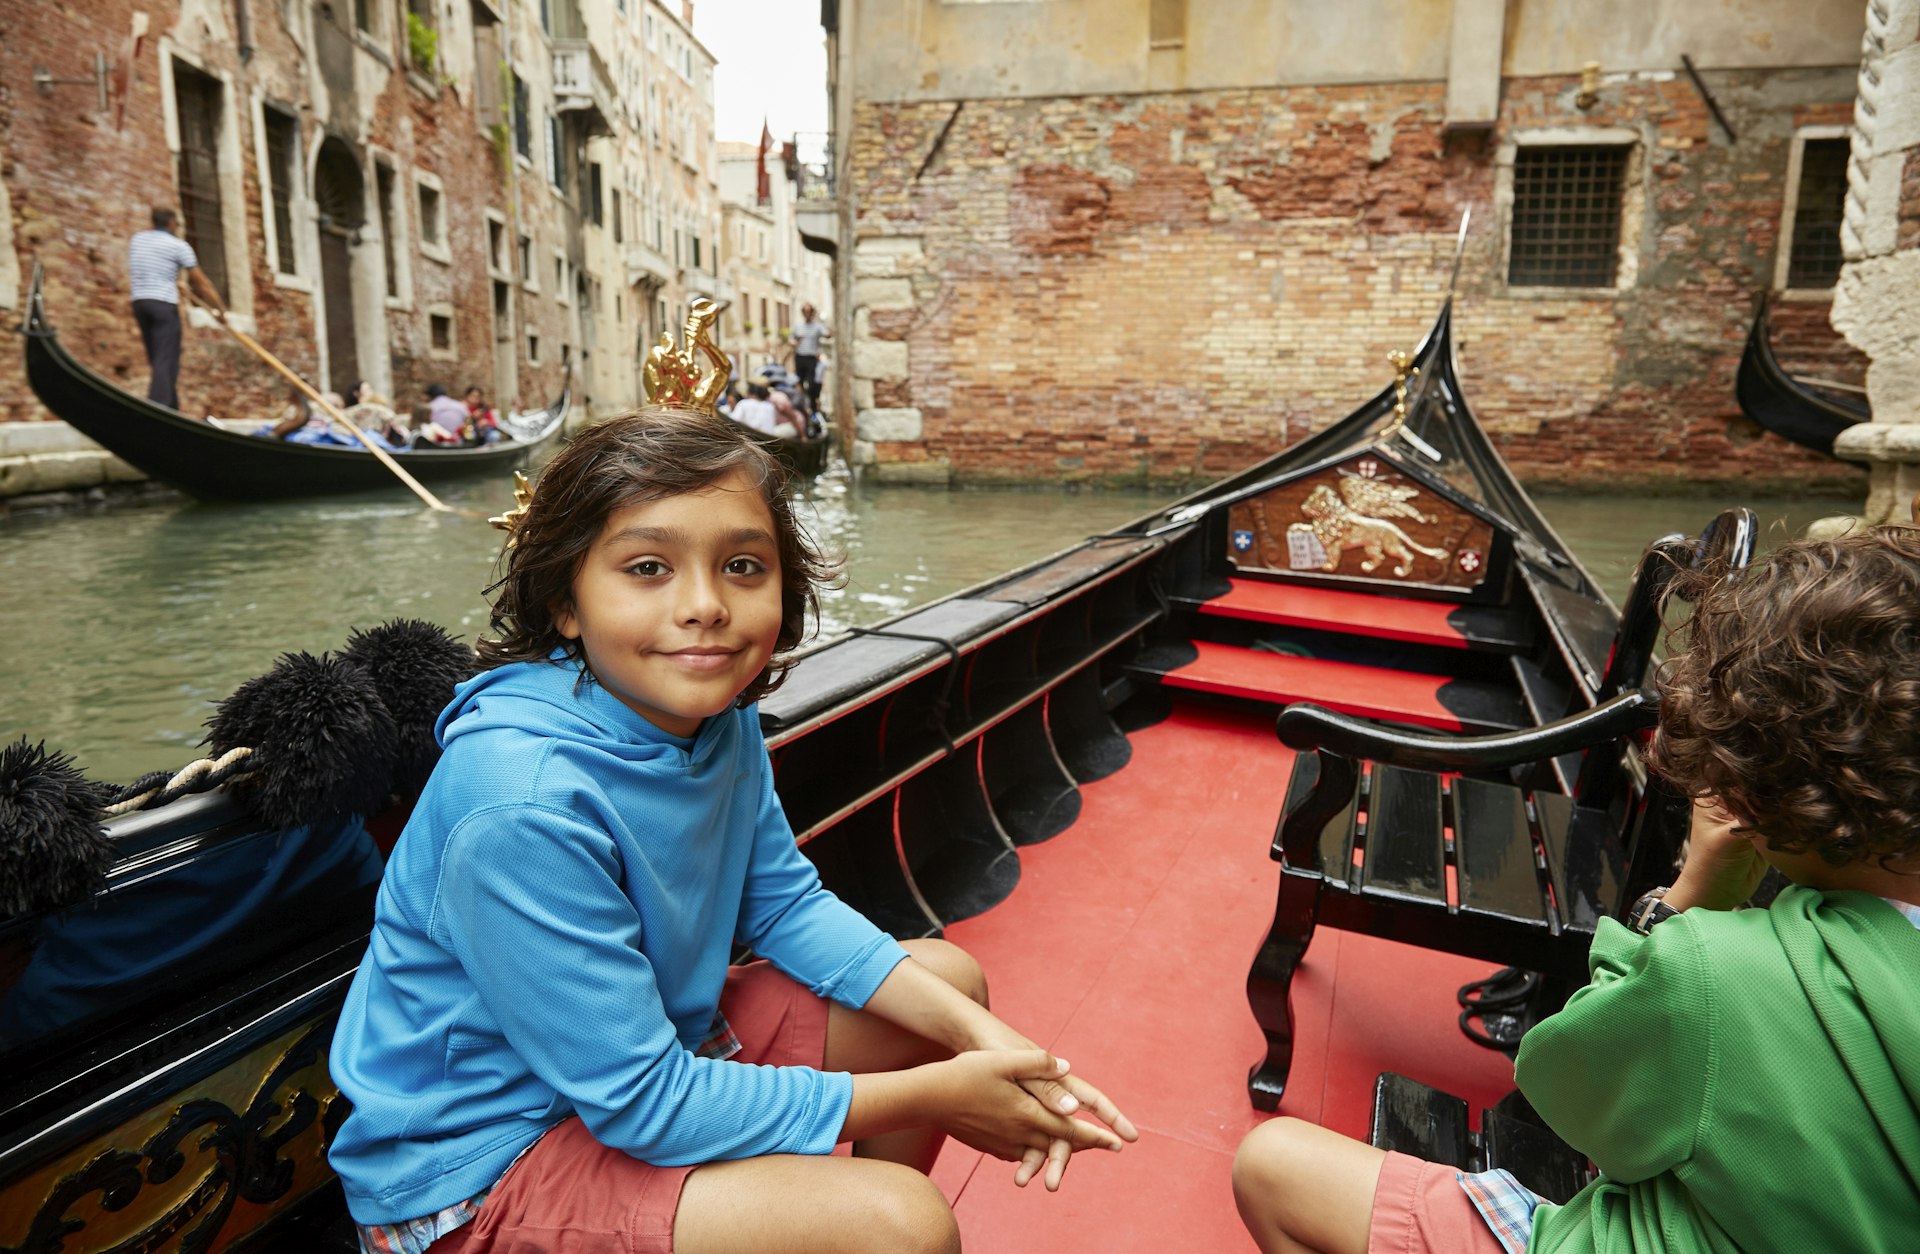 Boy sitting in a gondola on the Venice canal.